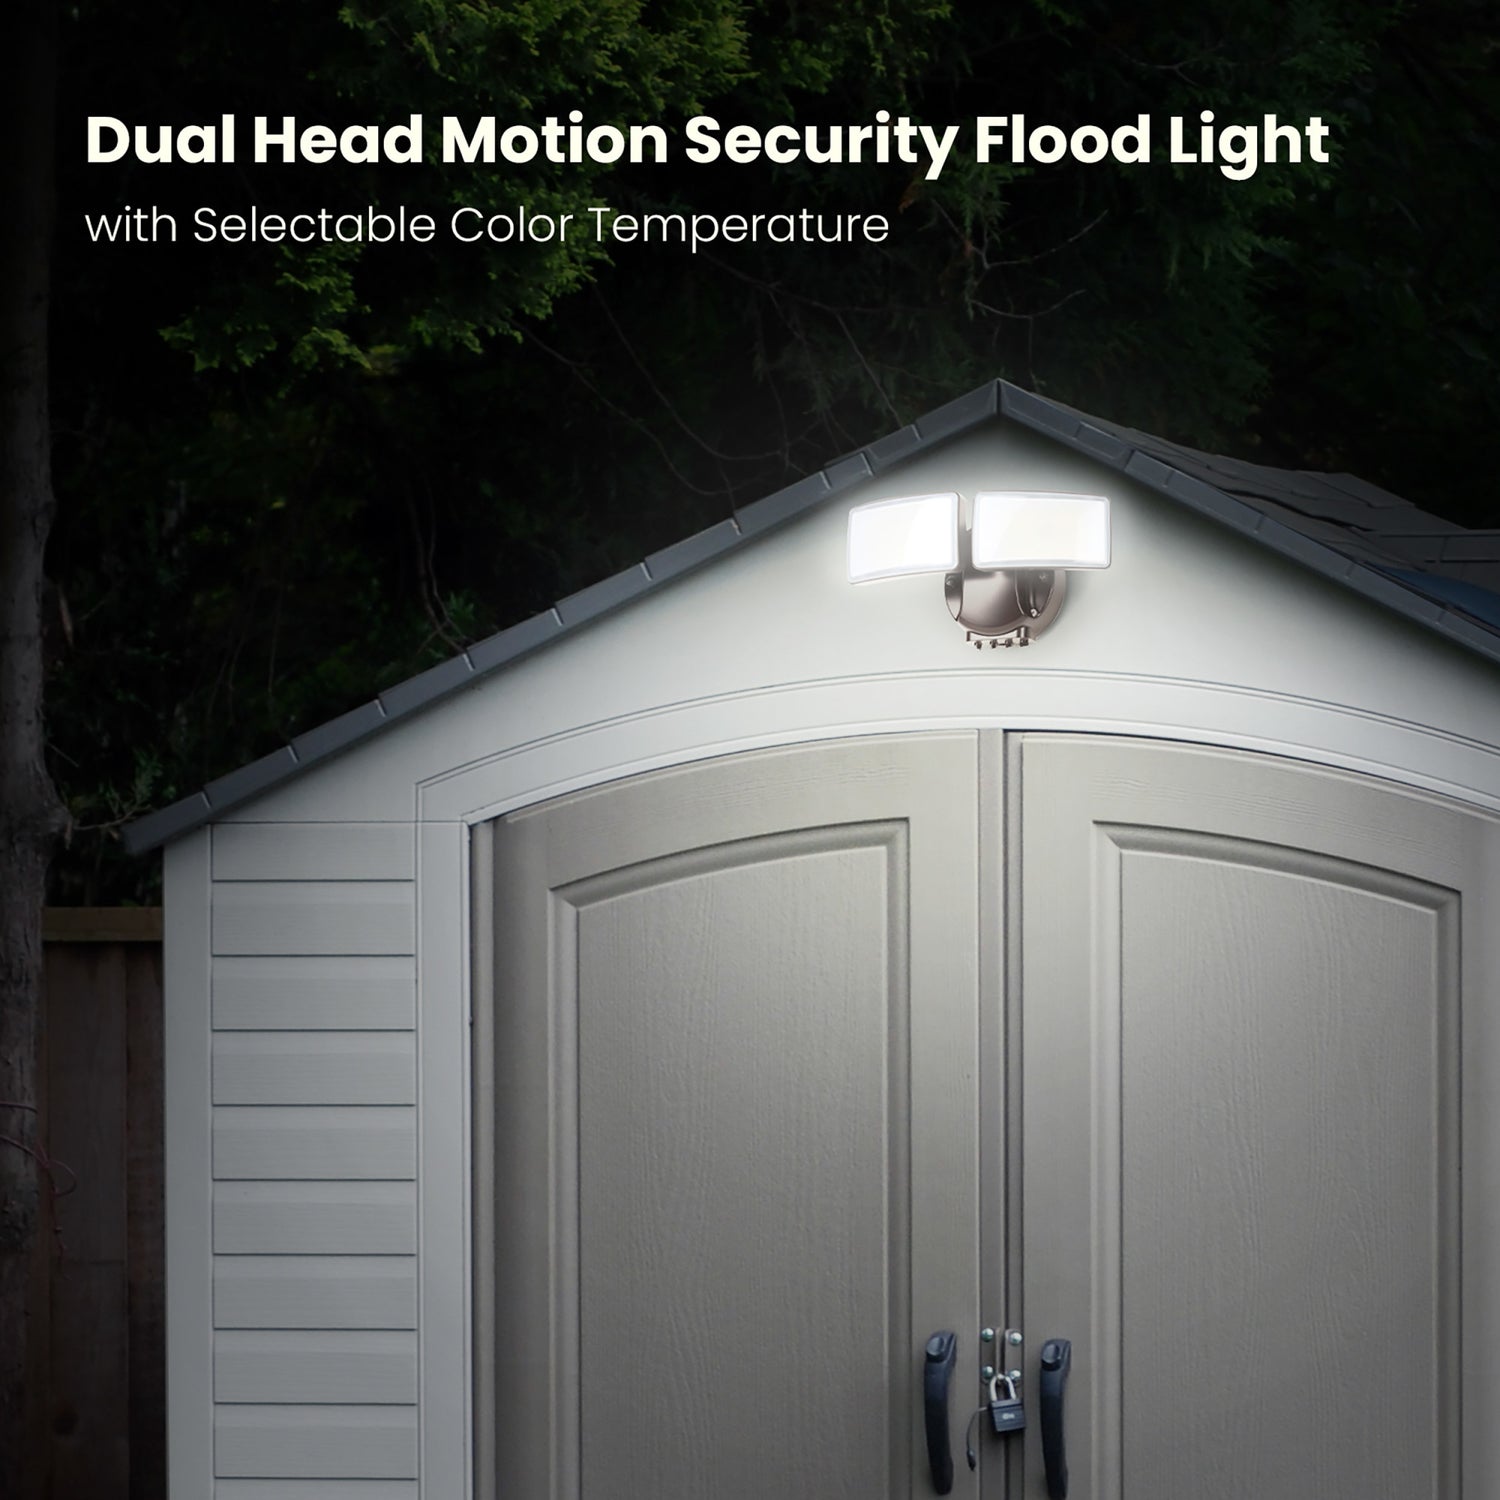 50W 5000L Selectable Color Dual Head LED Motion Security Flood Light, Bronze